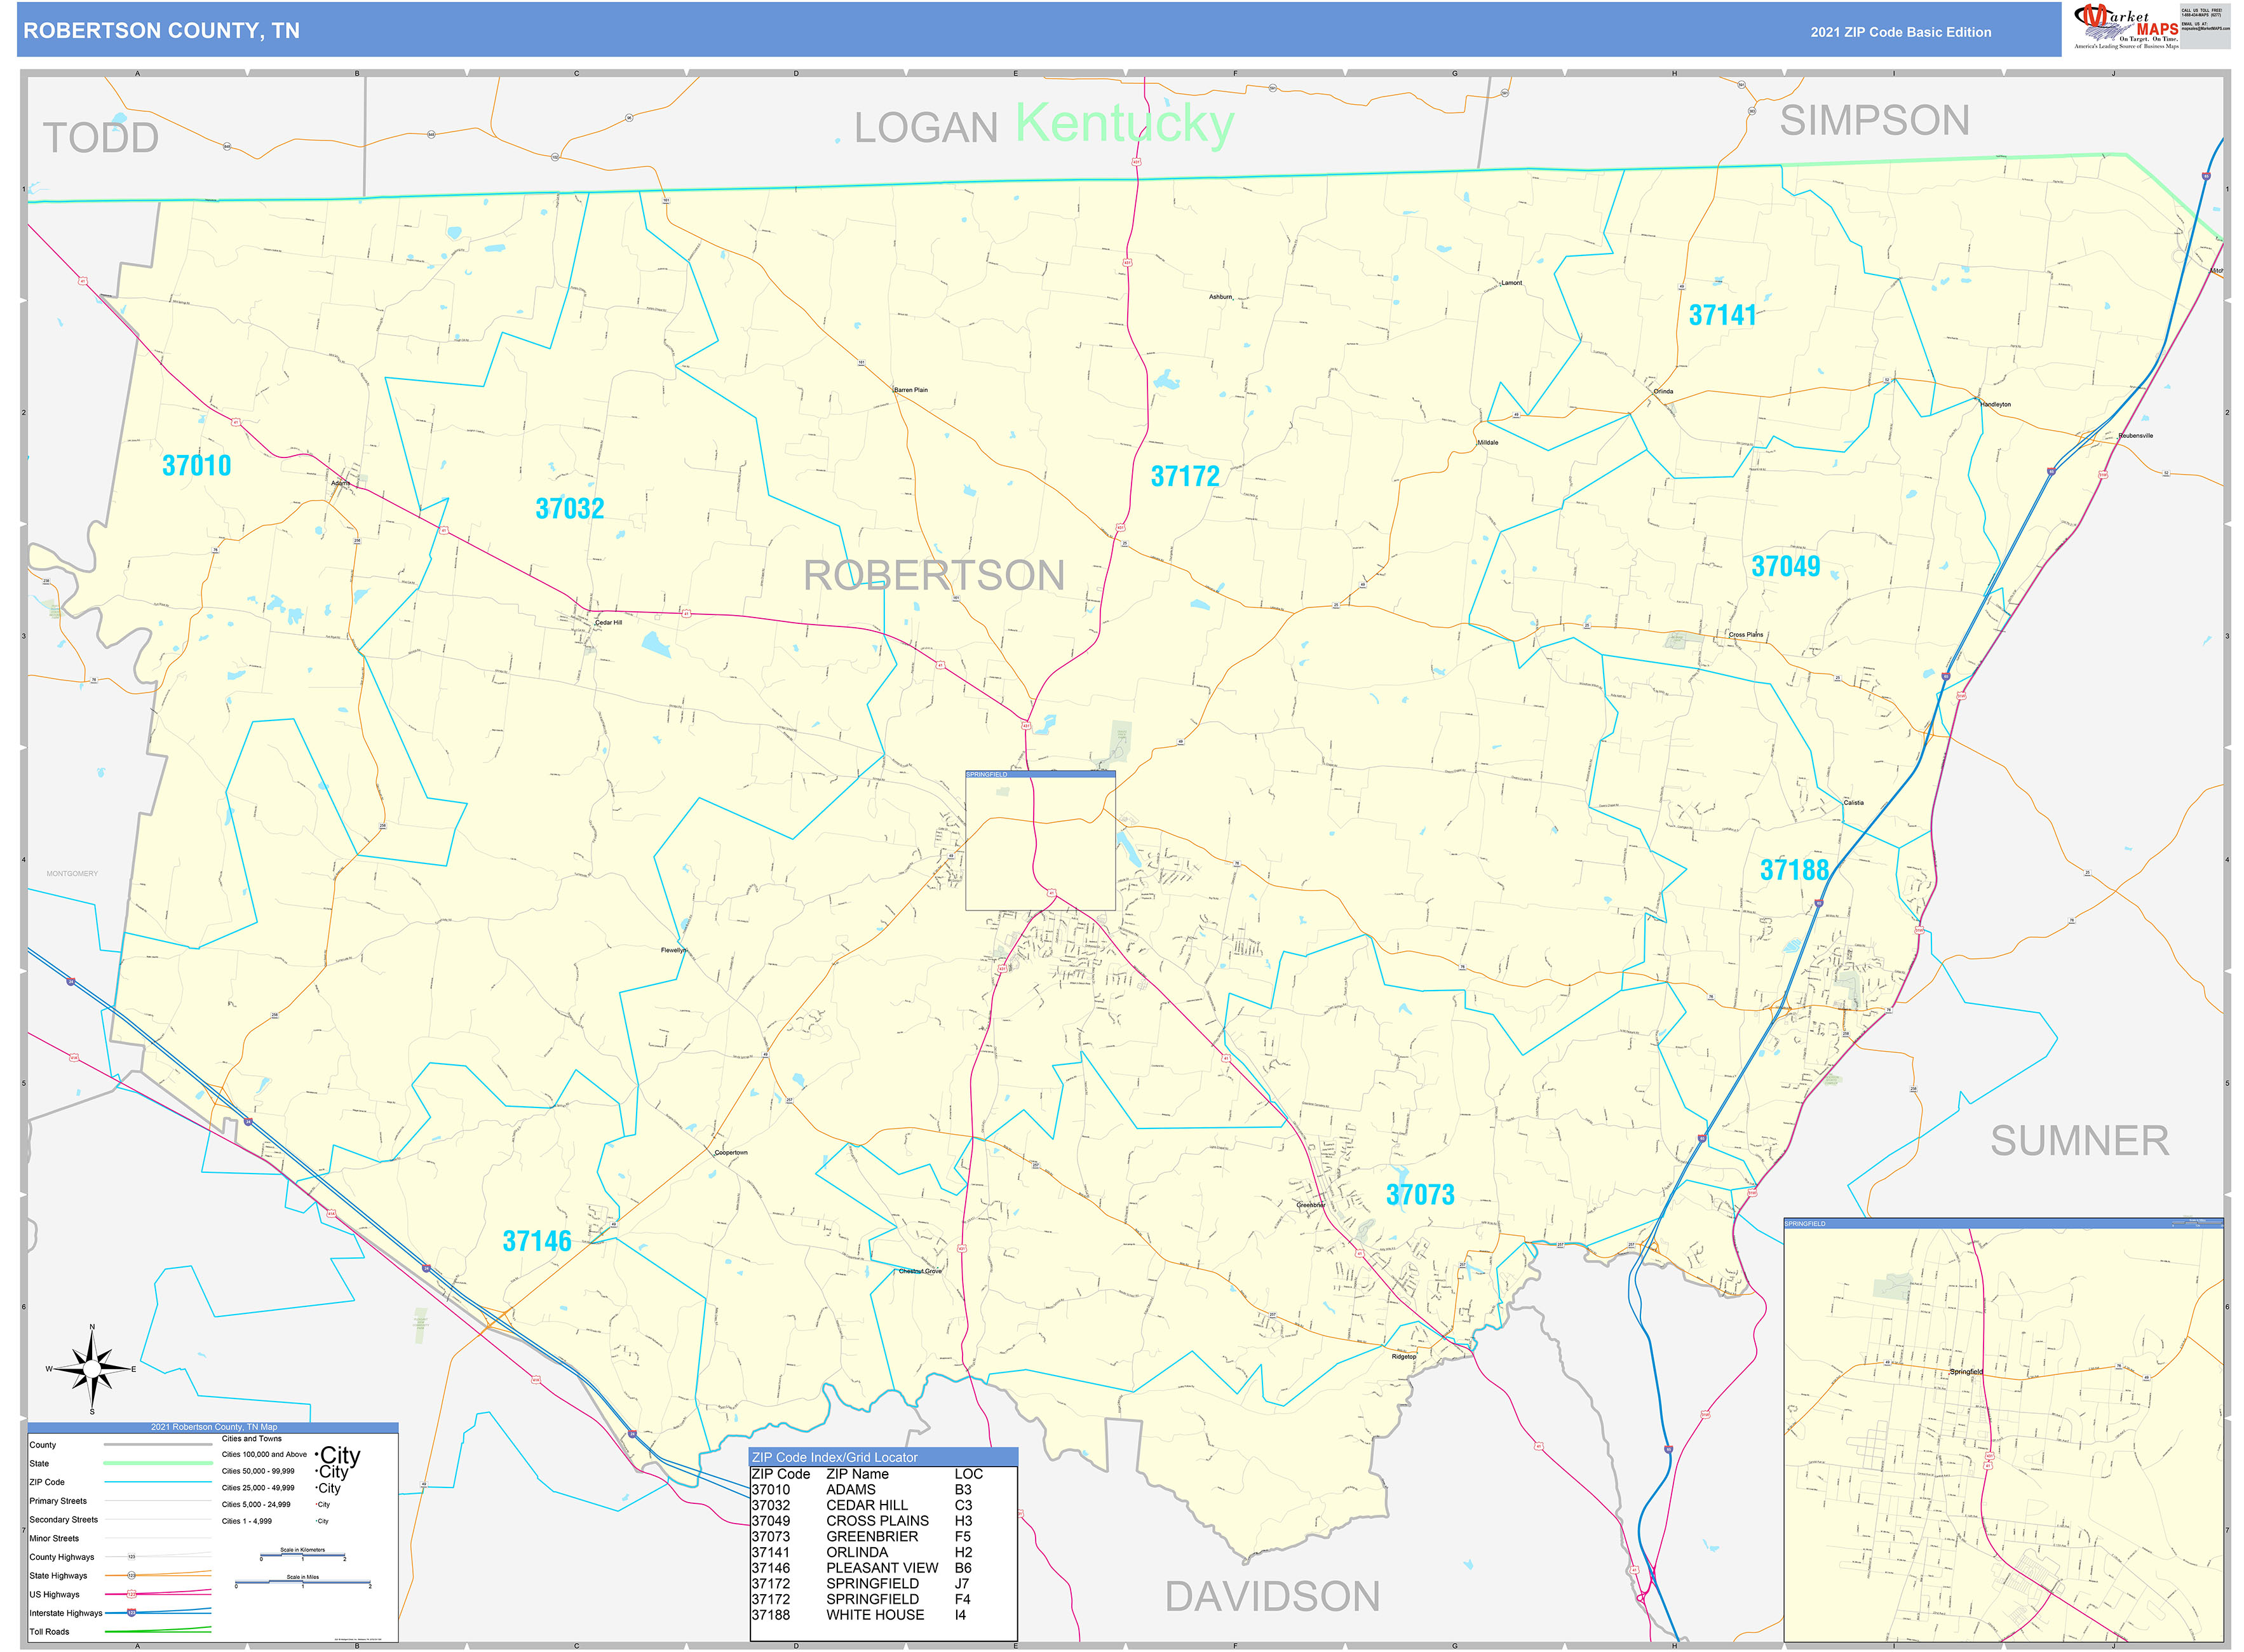 Robertson County, TN Zip Code Wall Map Basic Style by MarketMAPS